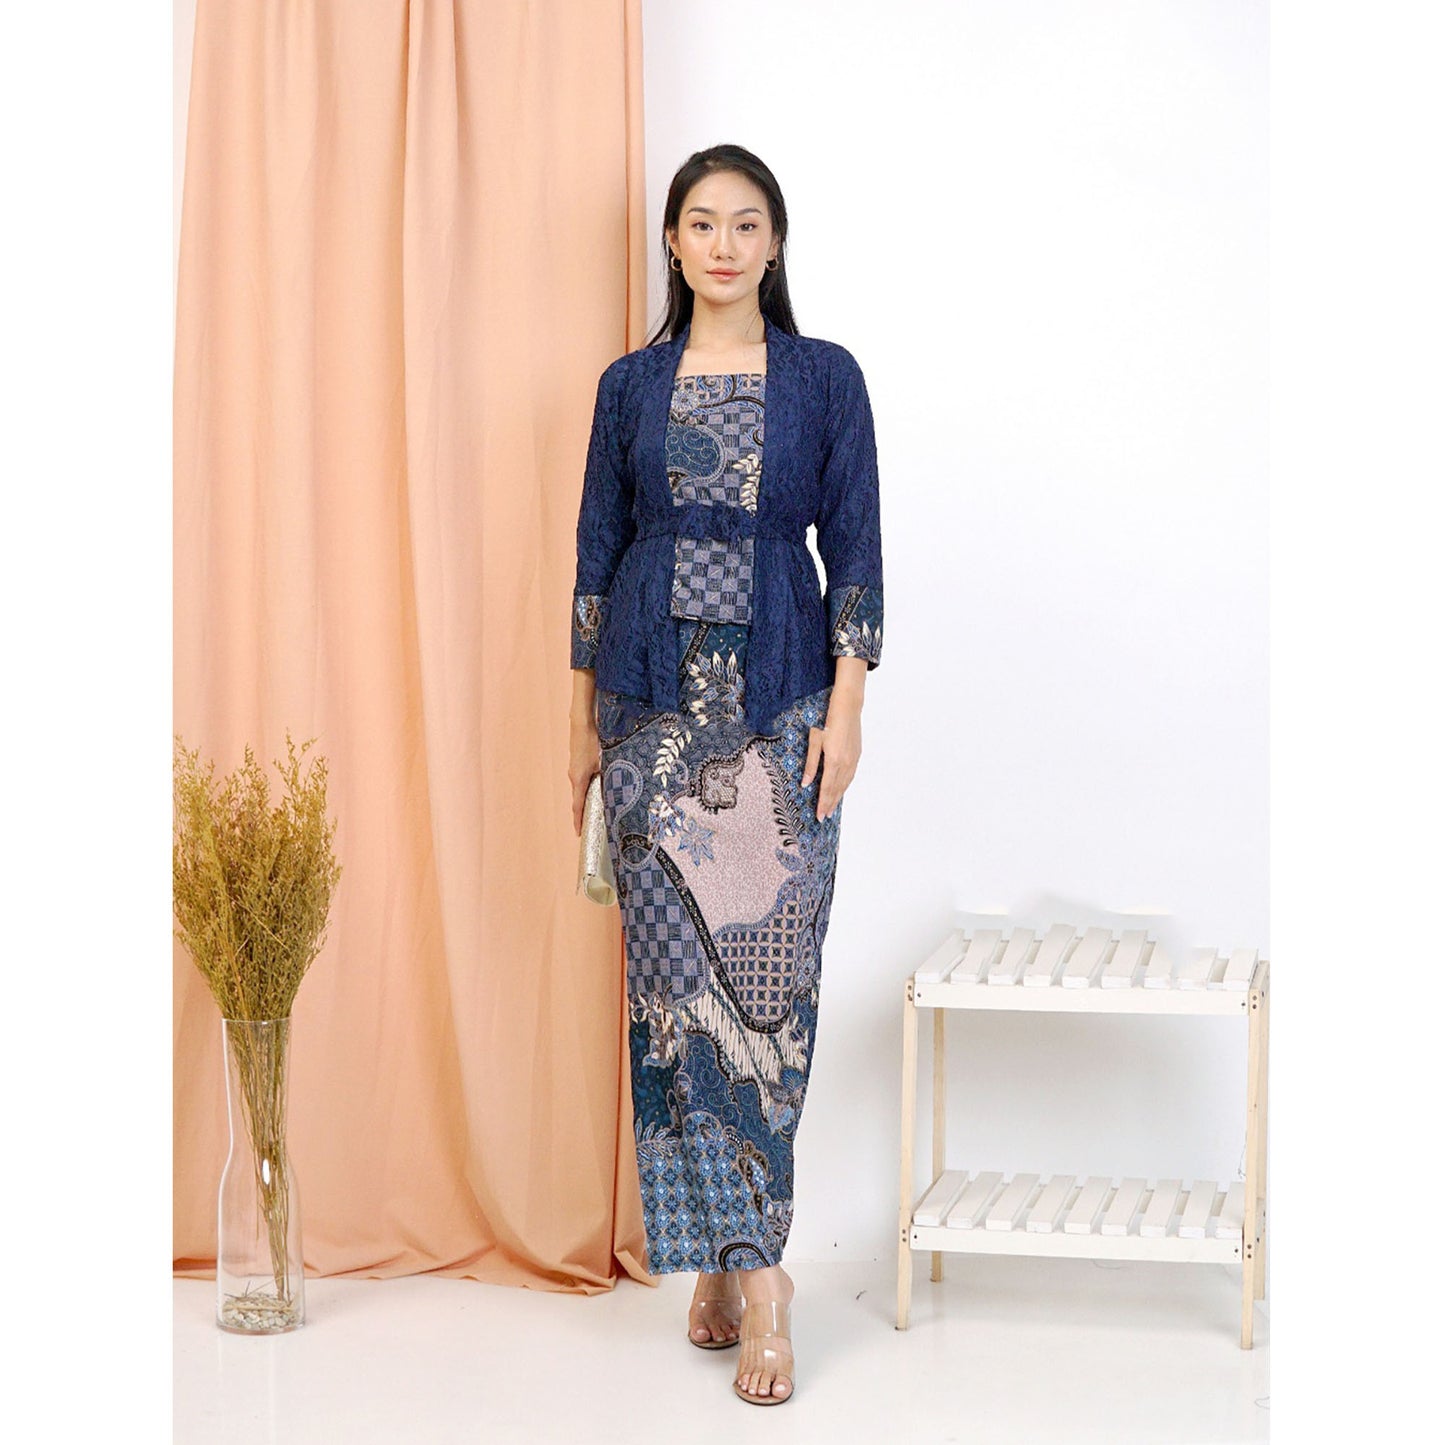 Contemporary Elnira Brocade Kebaya Set Latest Batik Patterned Skirt And Blouse